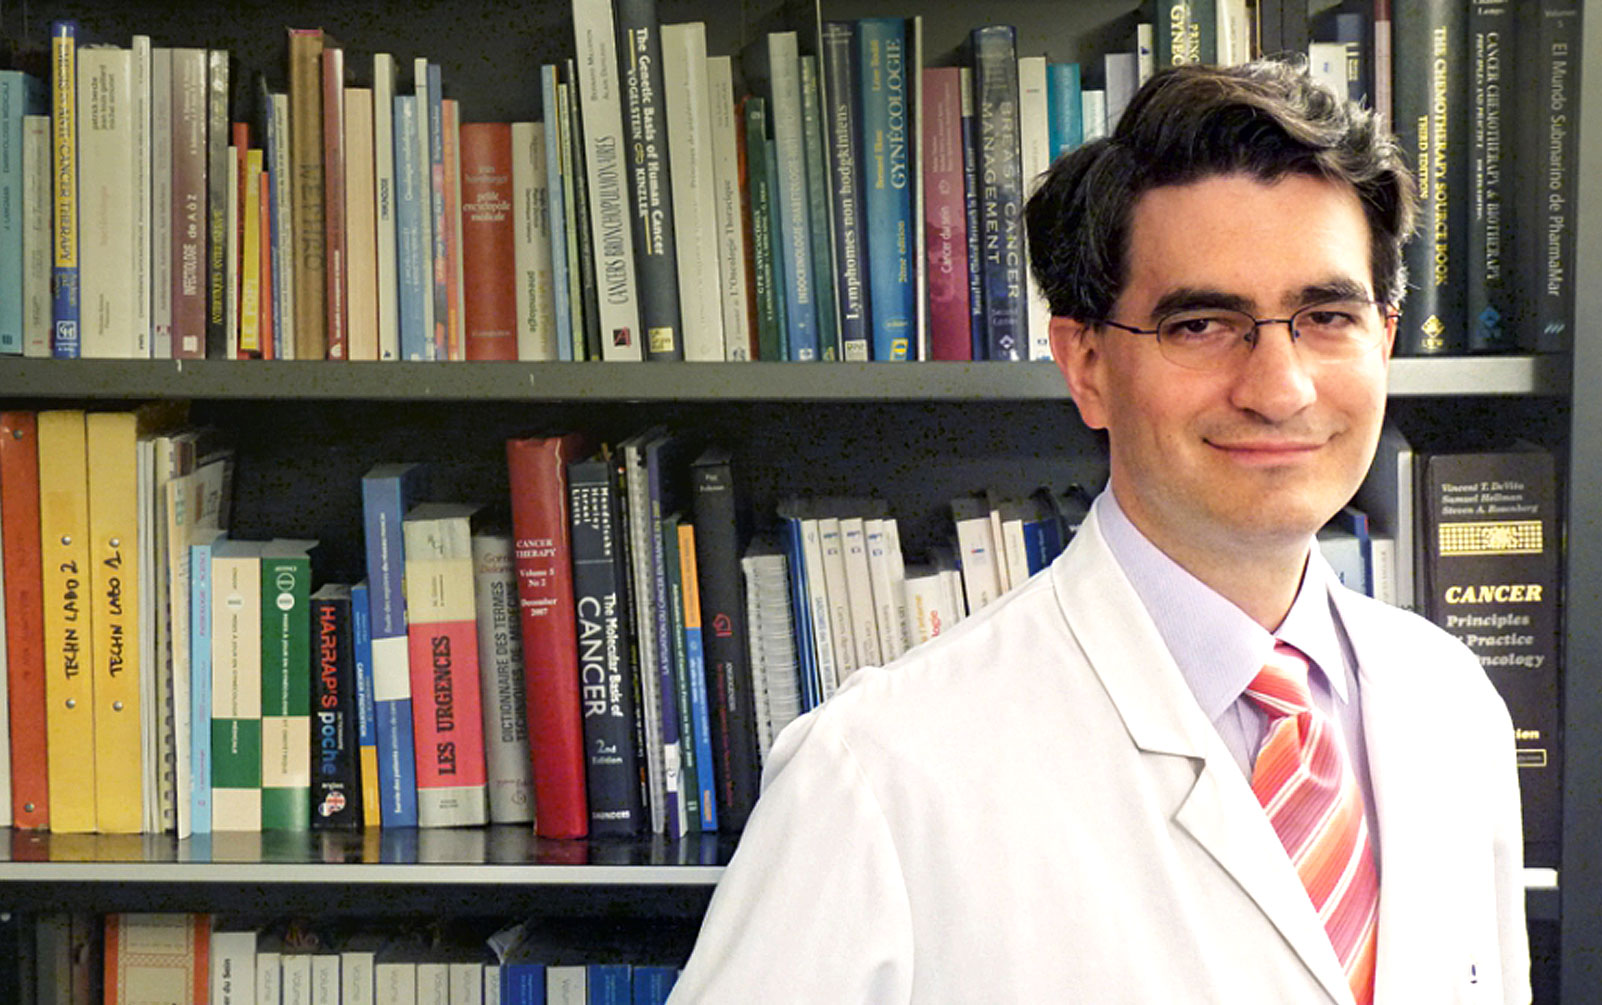 Jean-Charles Soria, MD, PhD